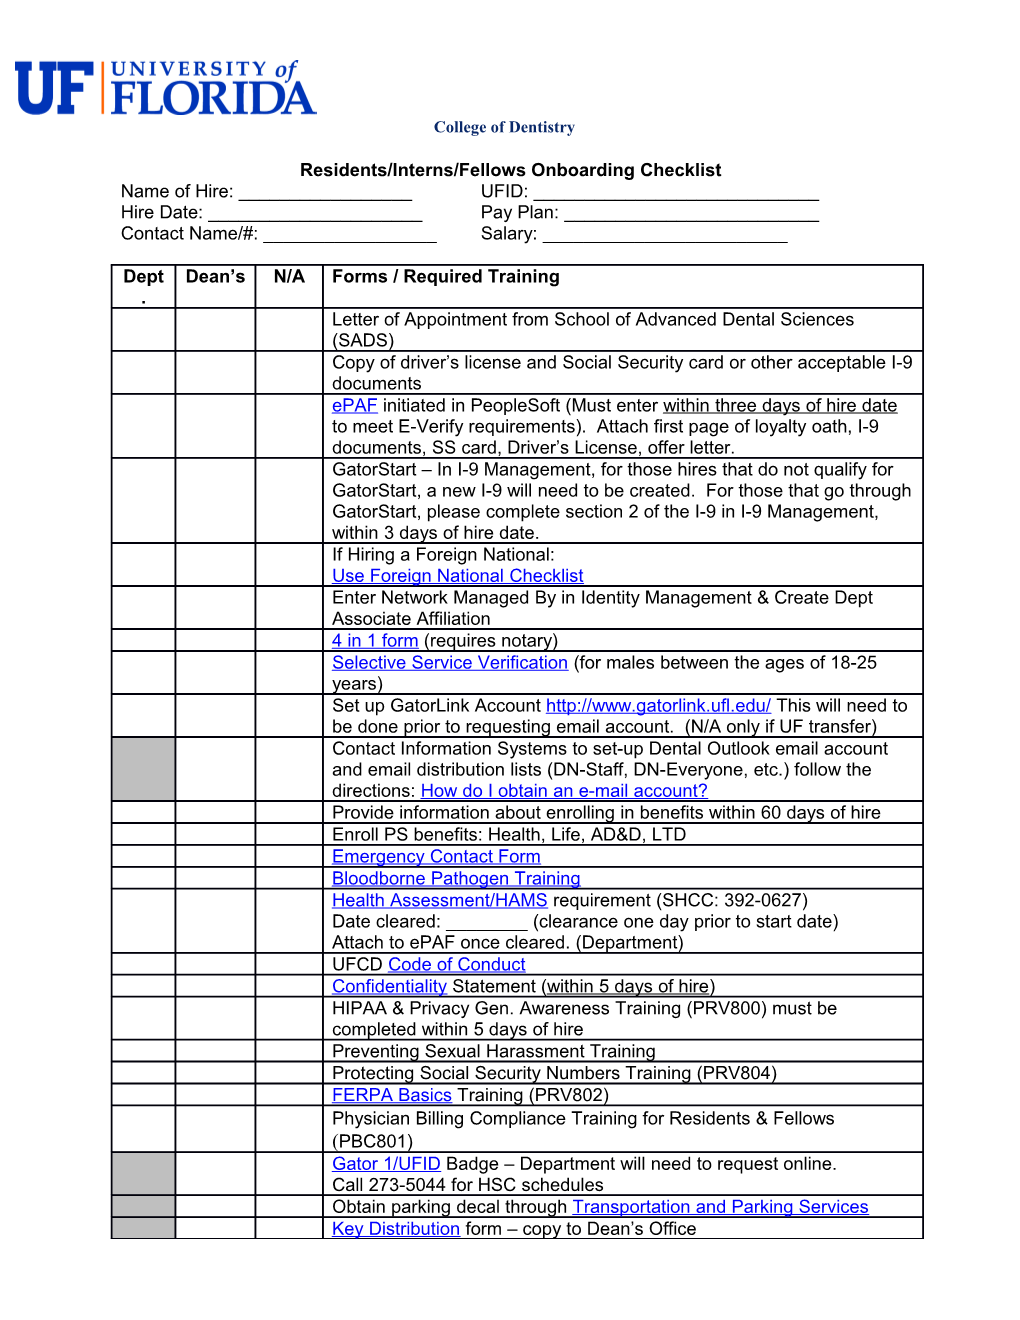 Residents/Interns/Fellowsonboarding Checklist